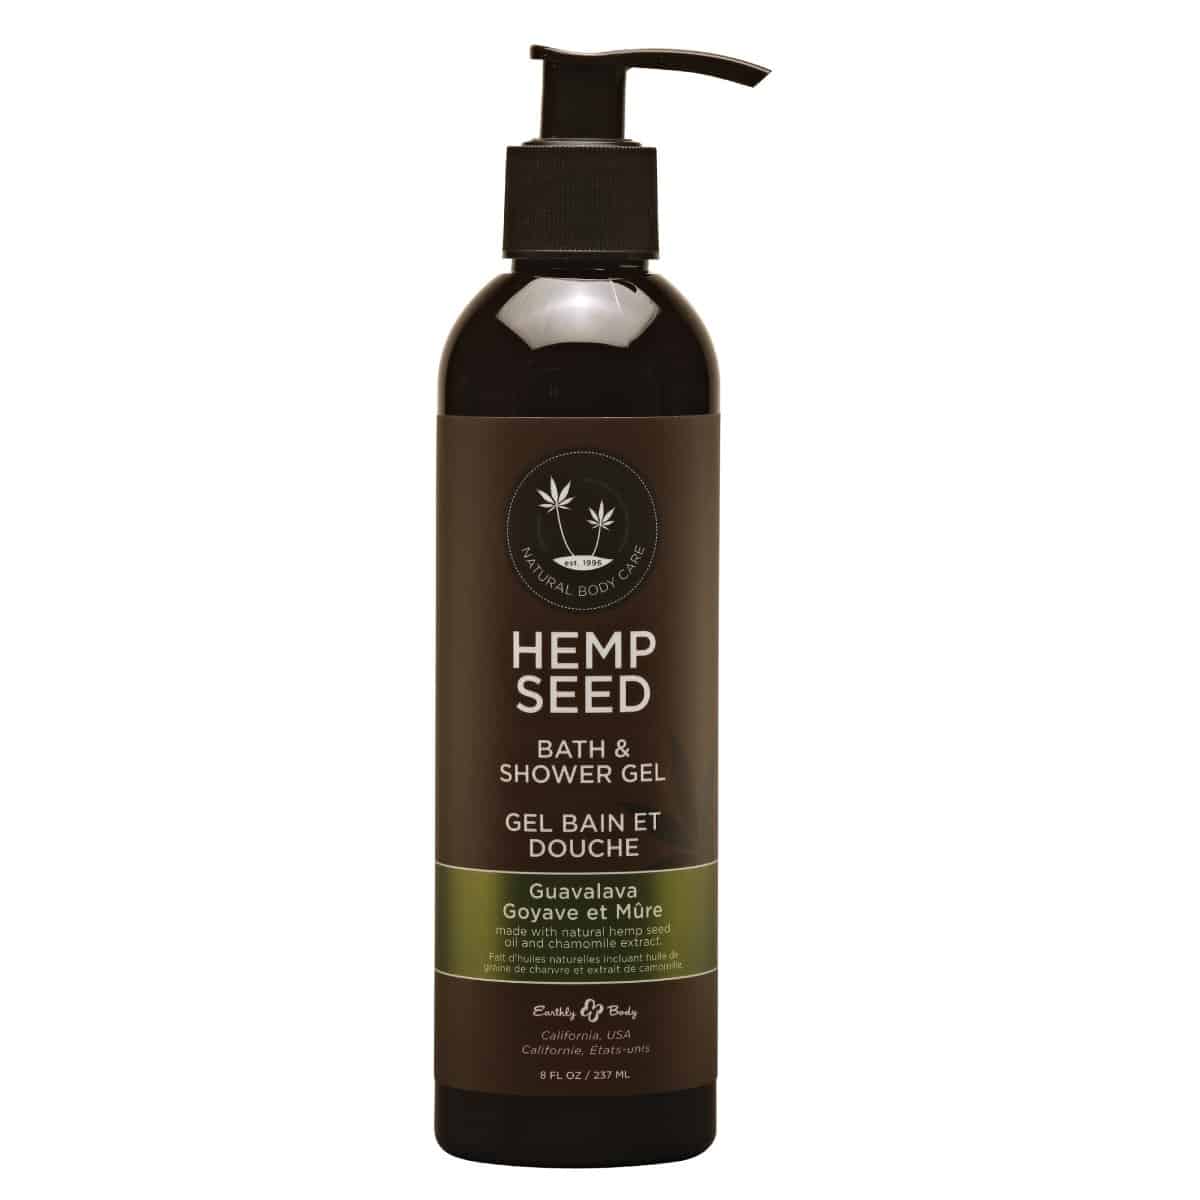 Hemp Seed Shower Gel 8 oz Guavalava Scent | Shop Hemp Seed Oil | Buy Hemp Seed Natural Shower Gel Online